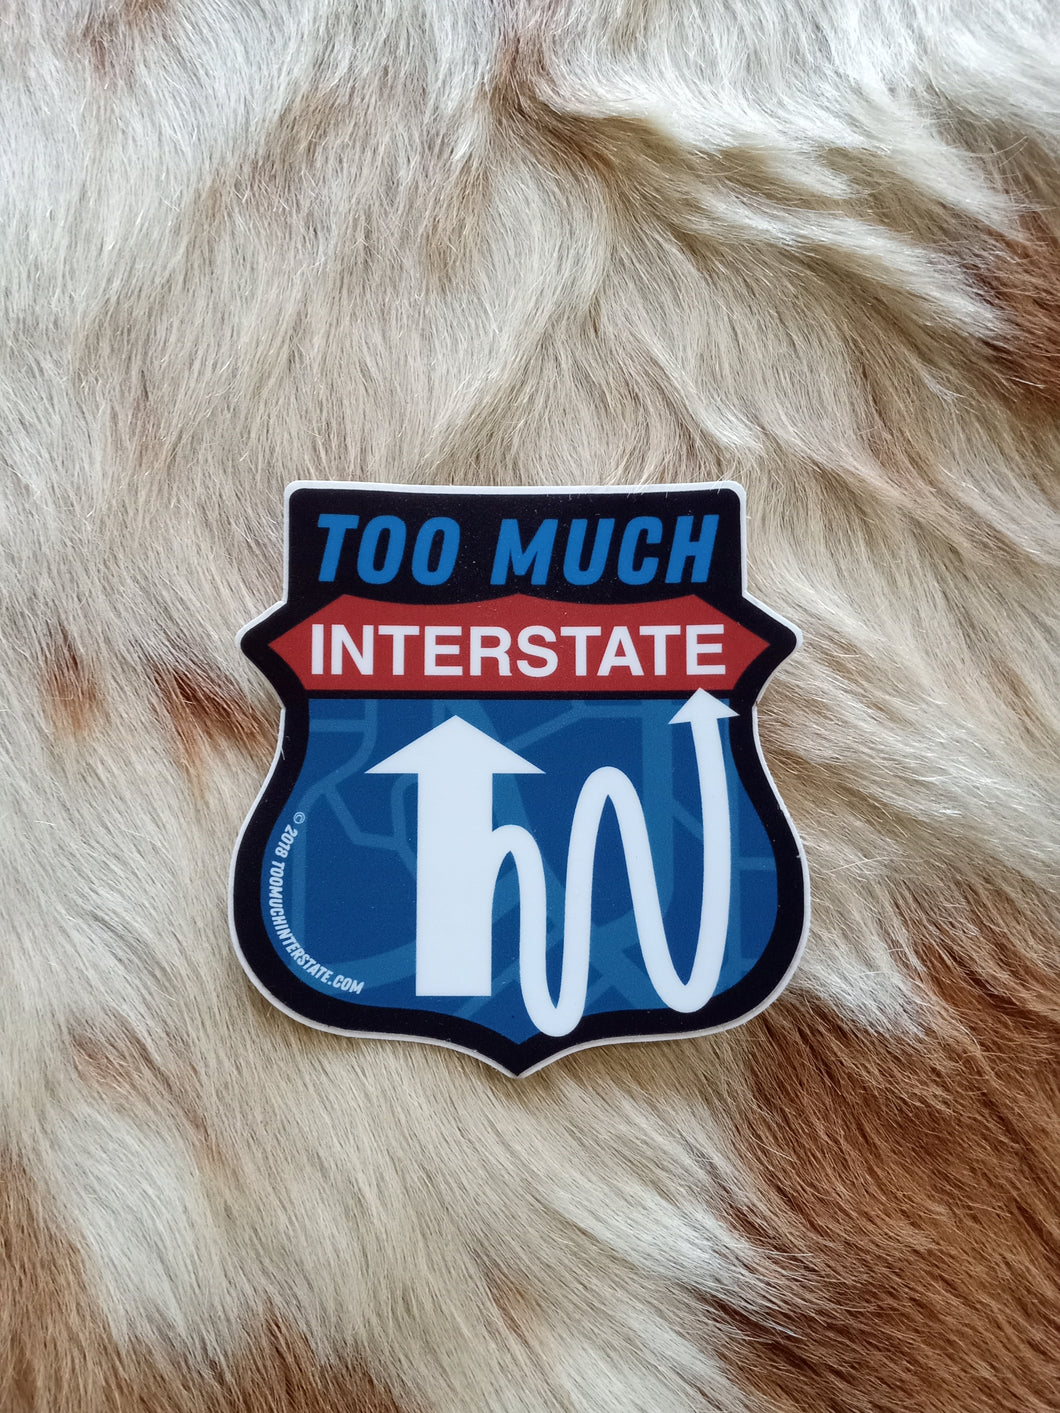 Too Much Interstate Highway Sign Decal Sticker